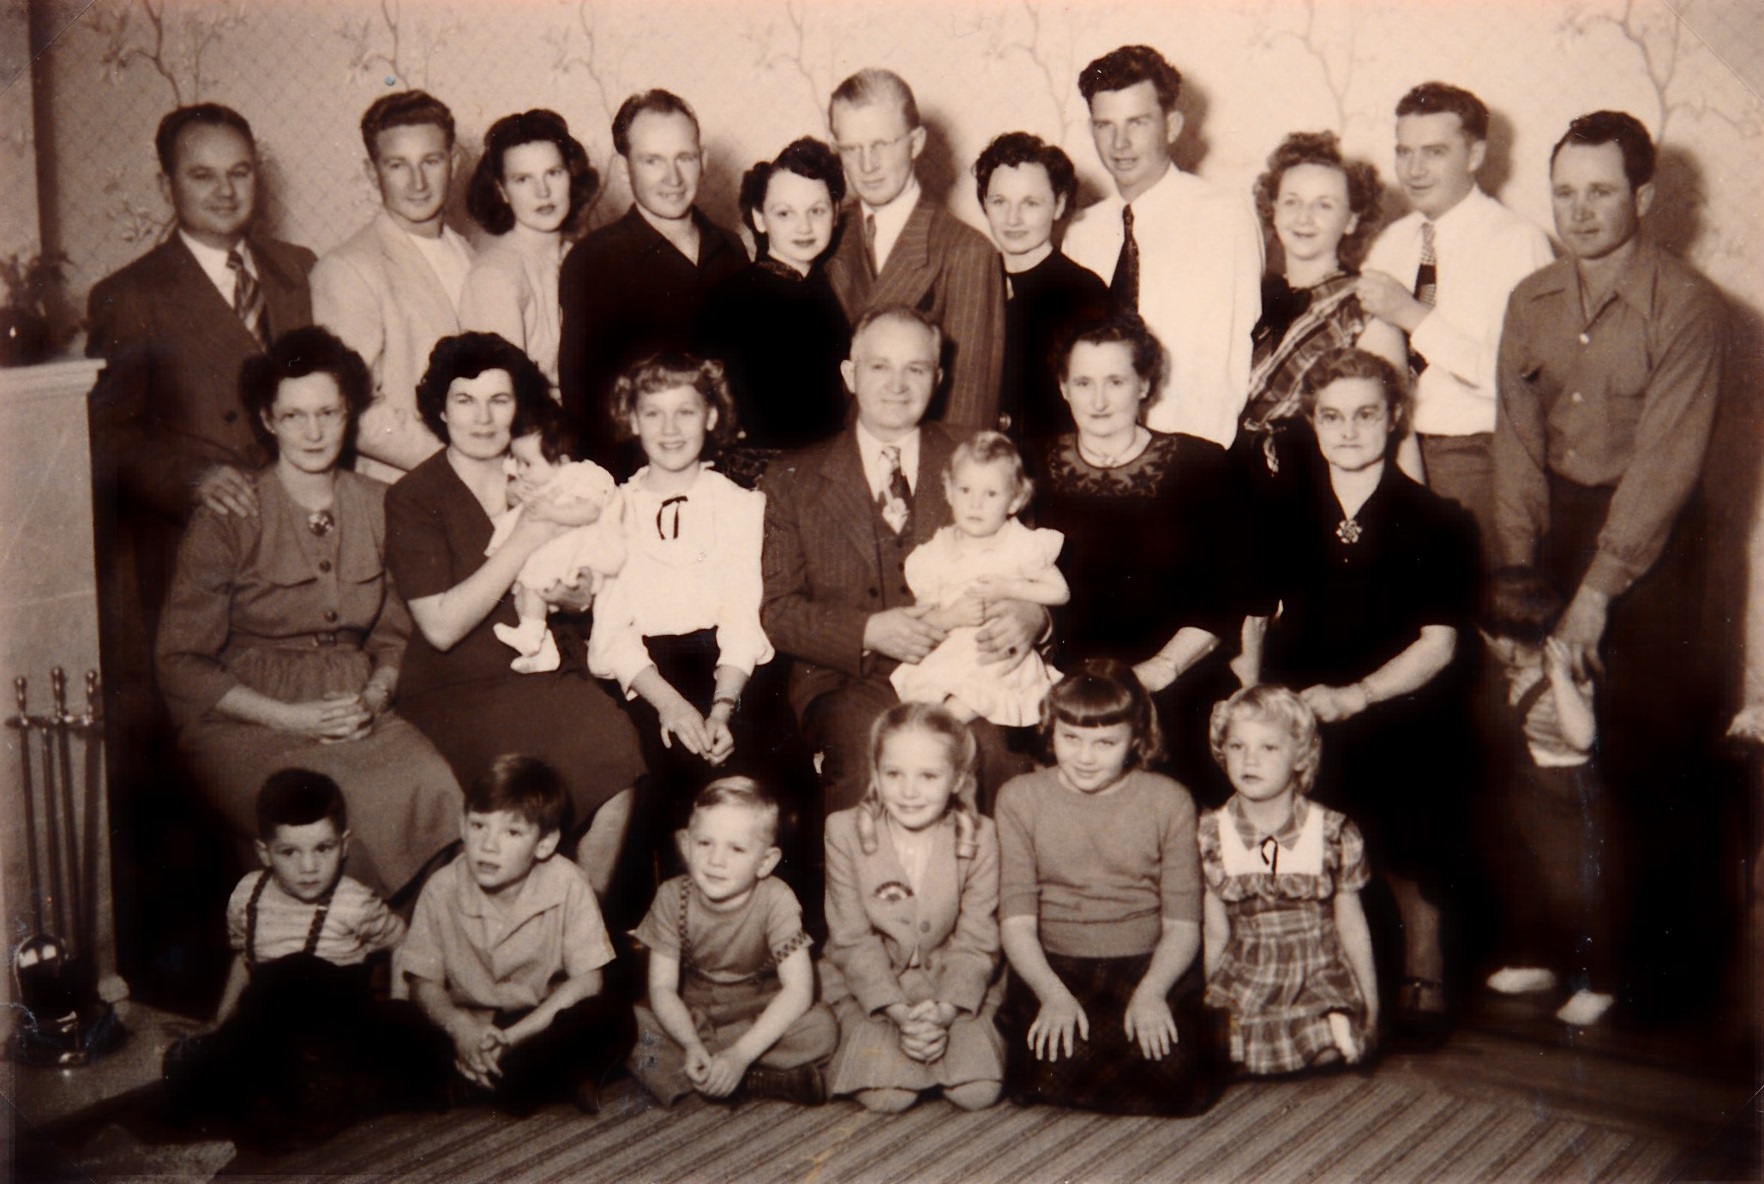 The Henry Graf family